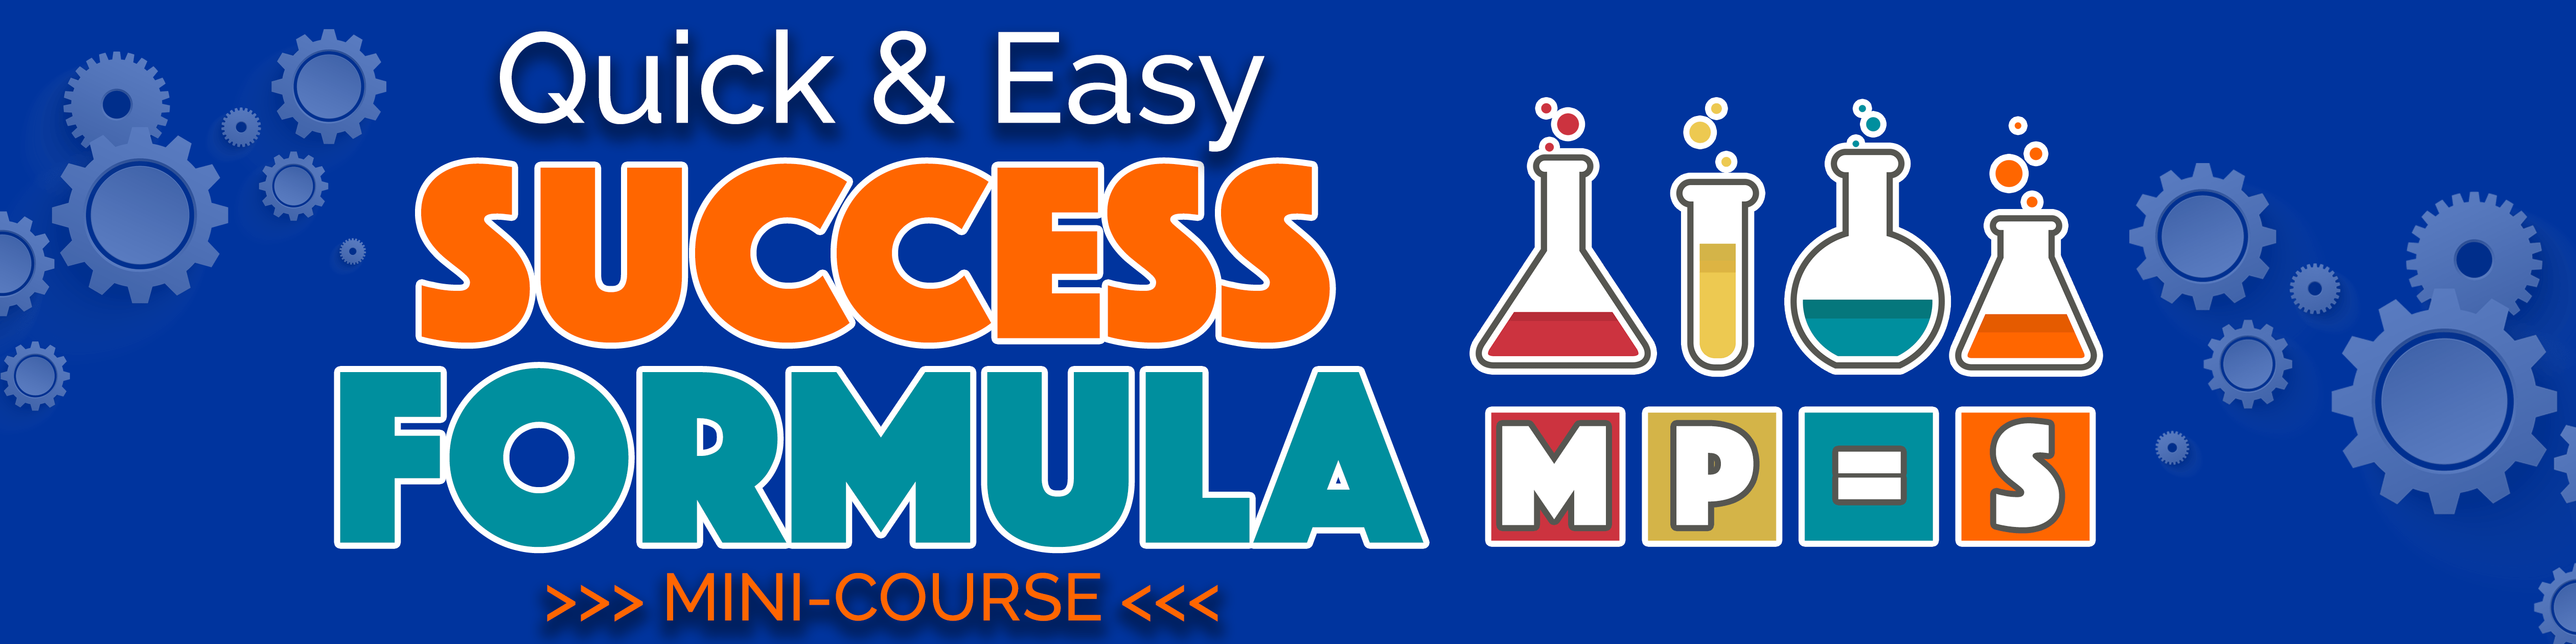 Quick & Easy Success Formula MINI-COURSE by Shawn Hansen